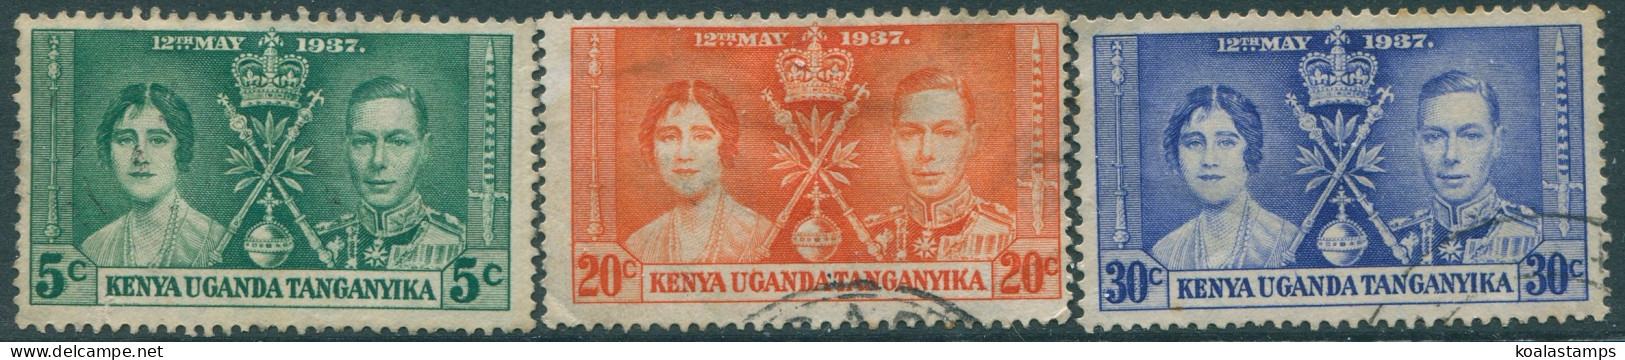 Kenya Uganda And Tanganyika 1937 SG128-130 KGVI Coronation Set FU (amd) - Kenya, Uganda & Tanganyika